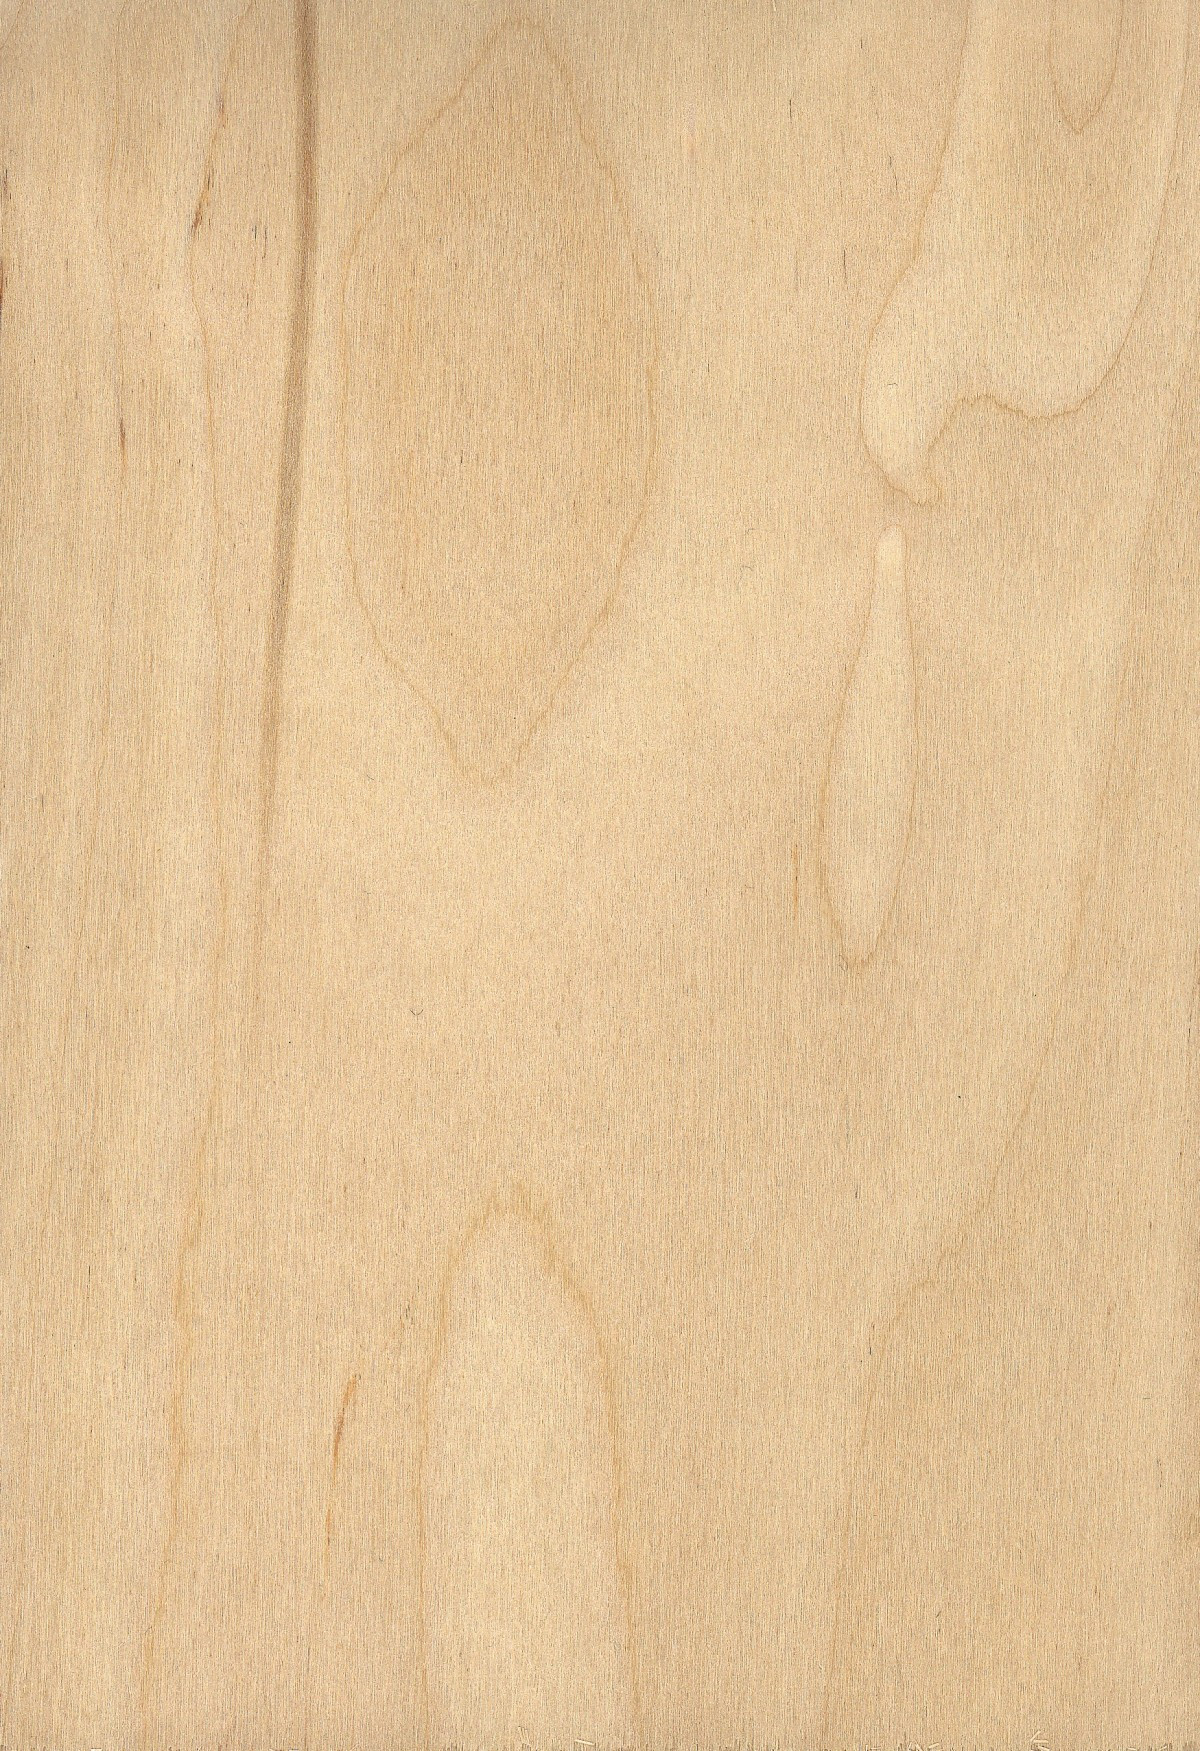 22 Cute Hardwood Floor Paper 2024 free download hardwood floor paper of free images sand texture floor wall pattern brown tile inside nature board wood grain texture floor